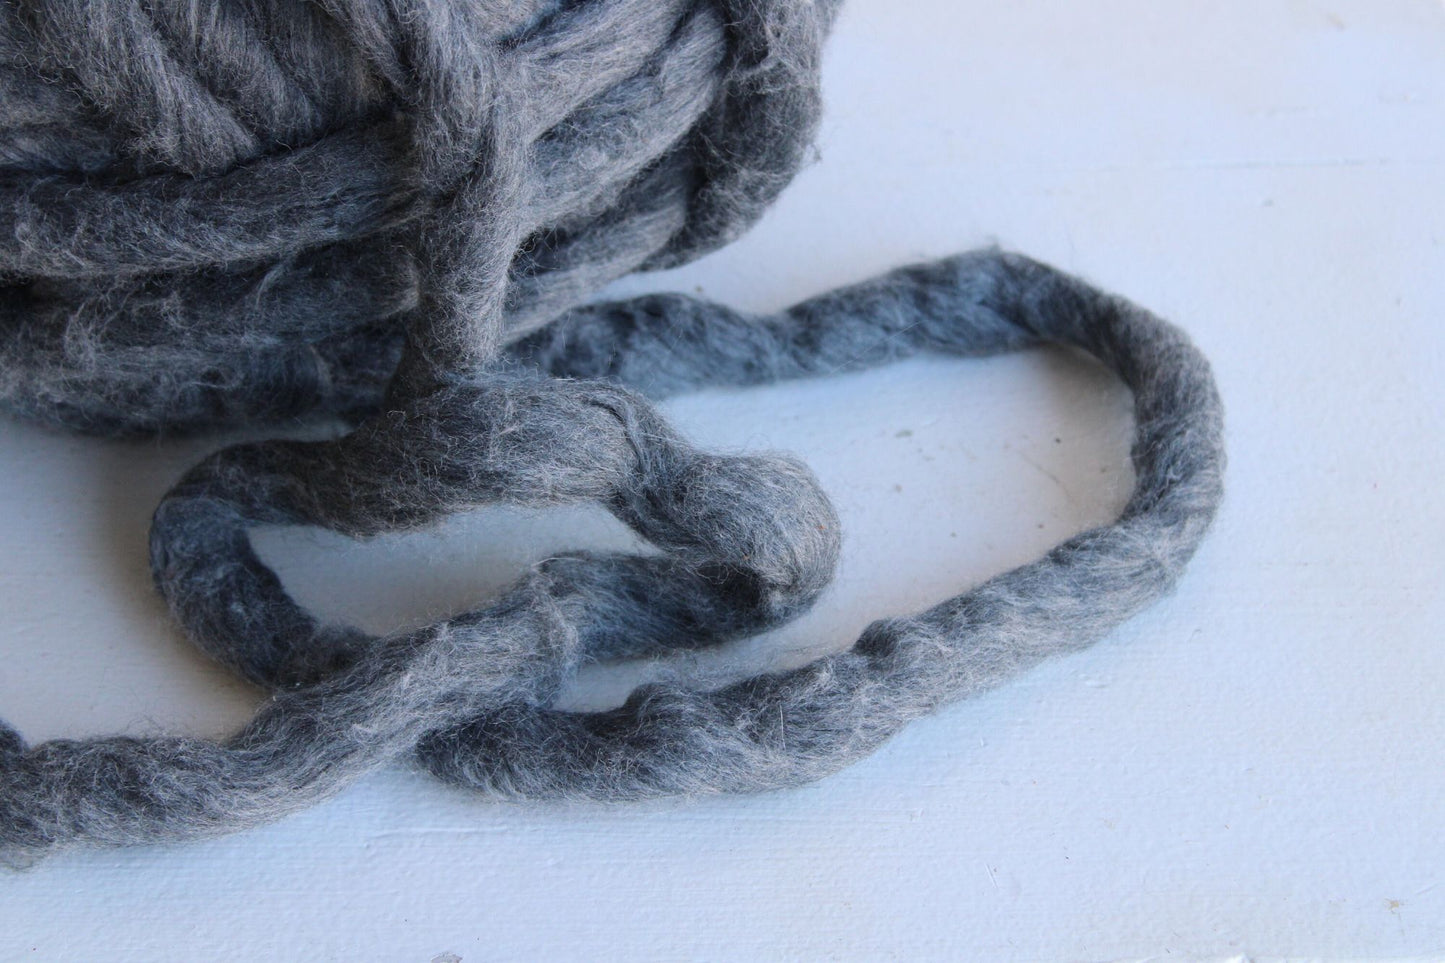 Extra Chunky Jumbo Yarn, Loops and Threads Free Spirit, Charcoal, 54 Yards, 35 oz, Knitting Supply